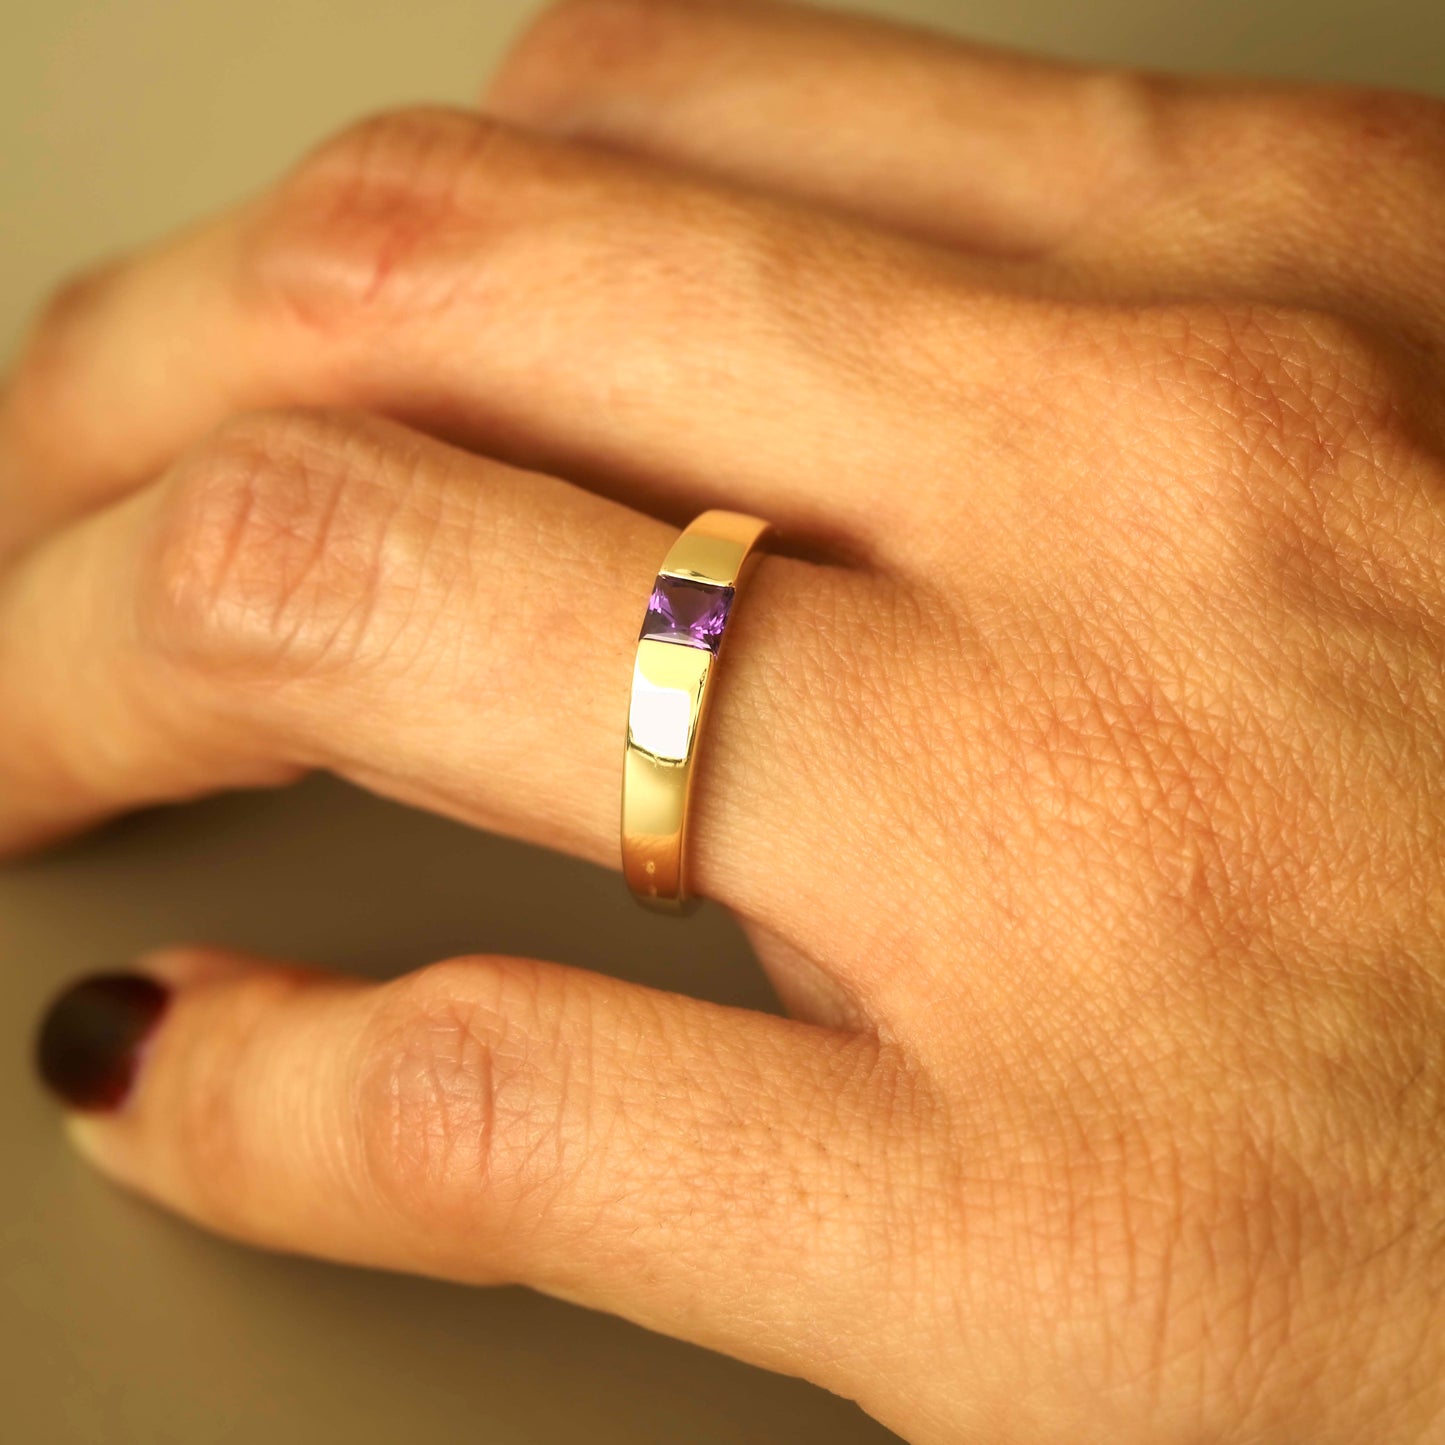 Vintage Style 18k Gold Amethyst Gemstone Ring - Size 7